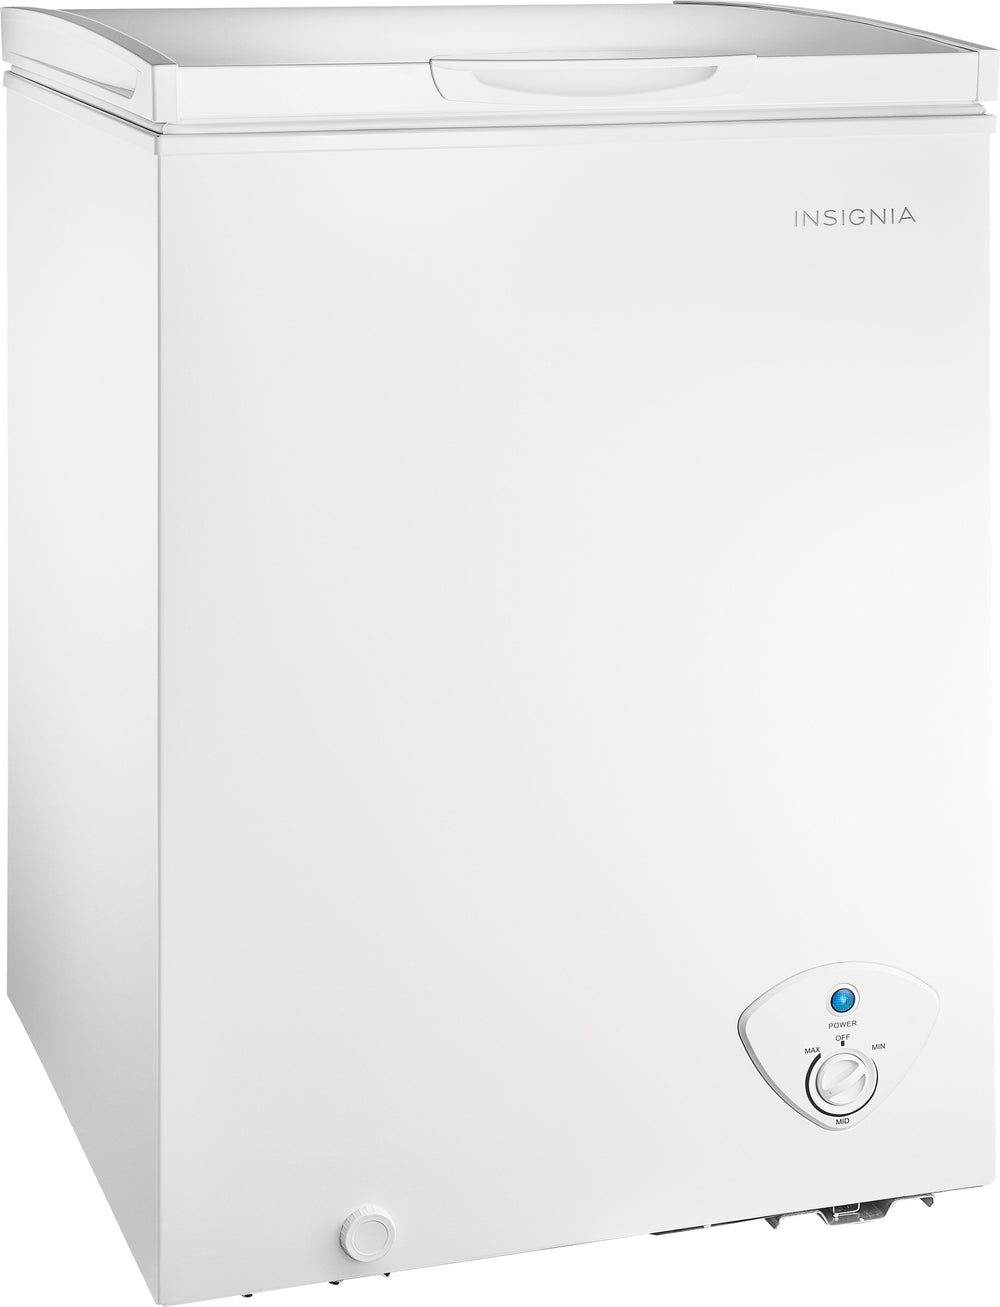 Insignia™ - 3.5 Cu. Ft. Chest Freezer - White_1